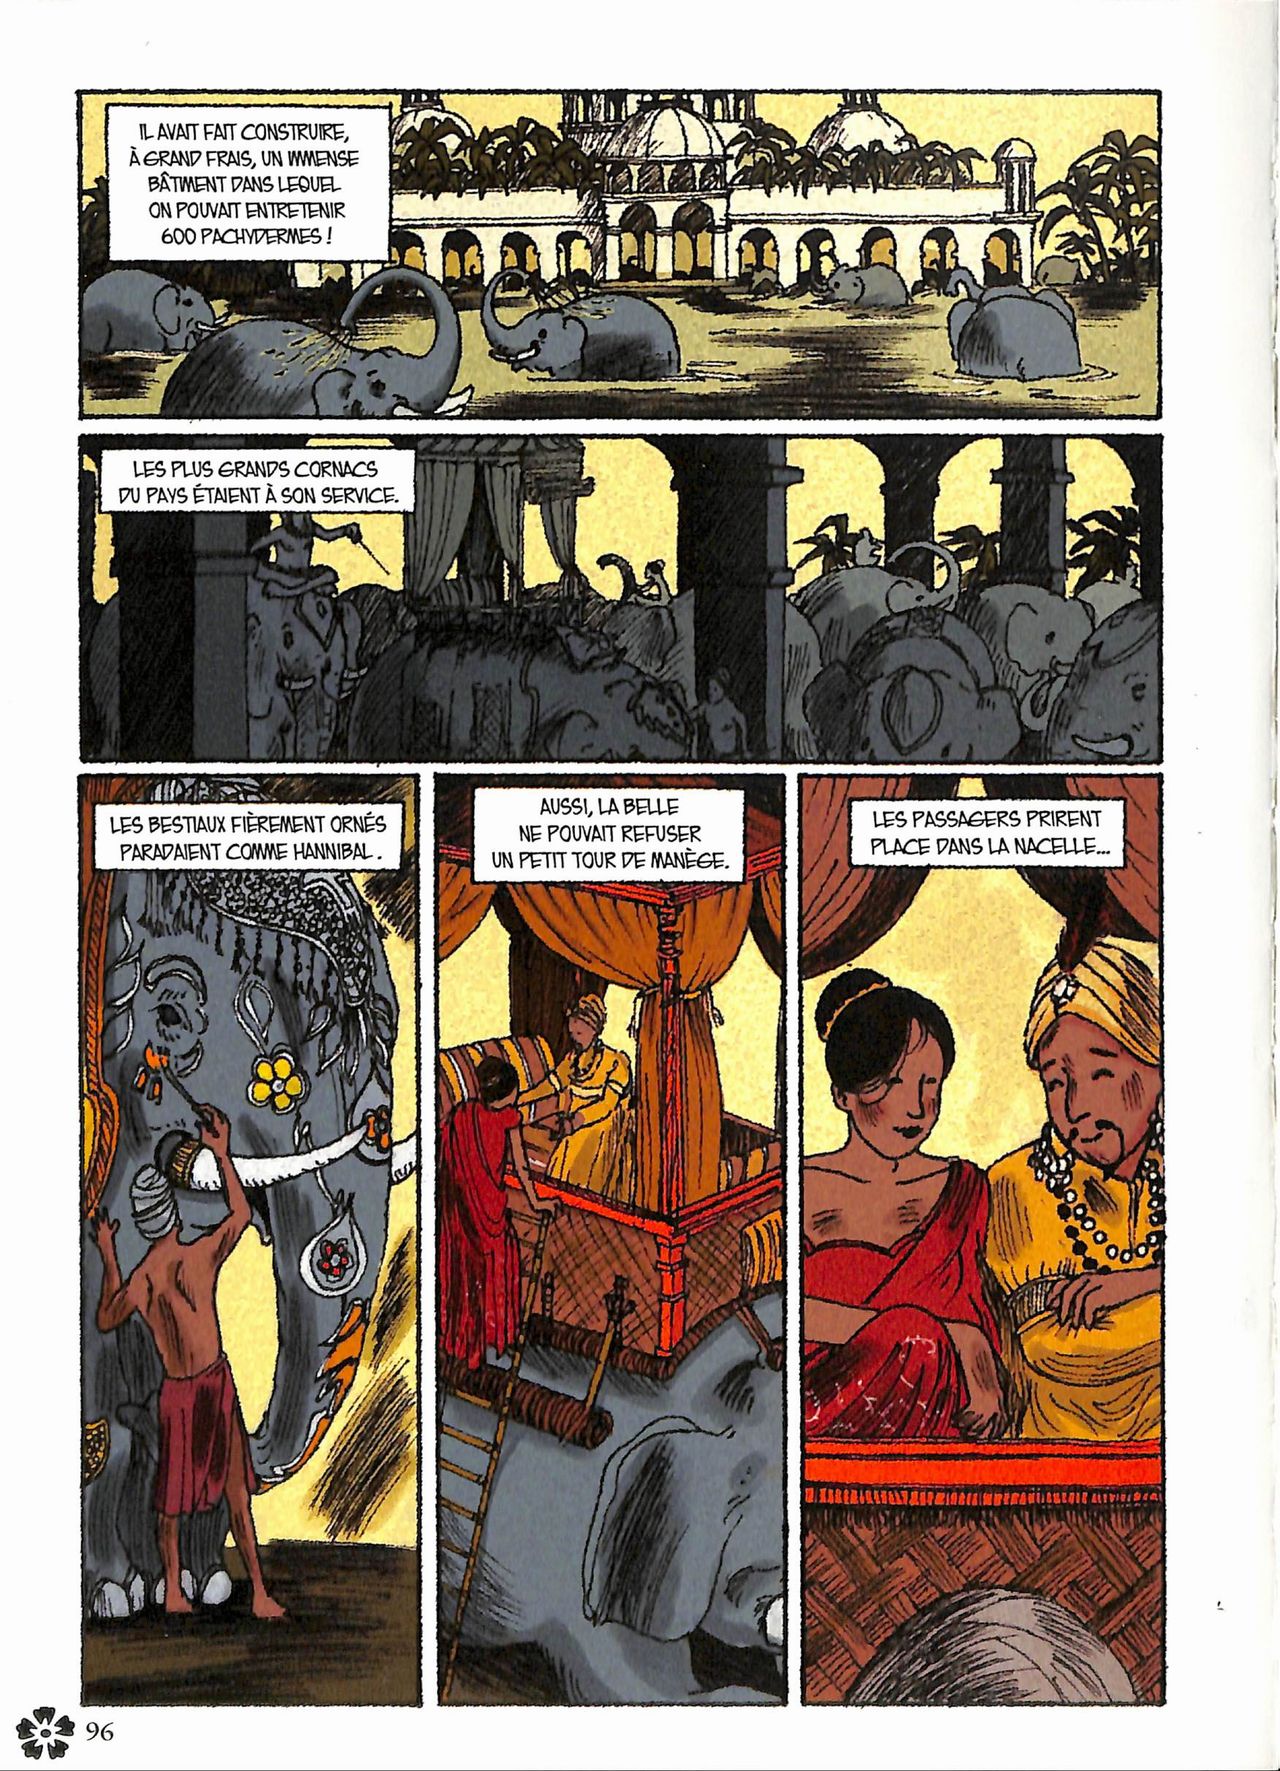 Kama Sutra en bandes dessinées - Kama Sutra with Comics numero d'image 97